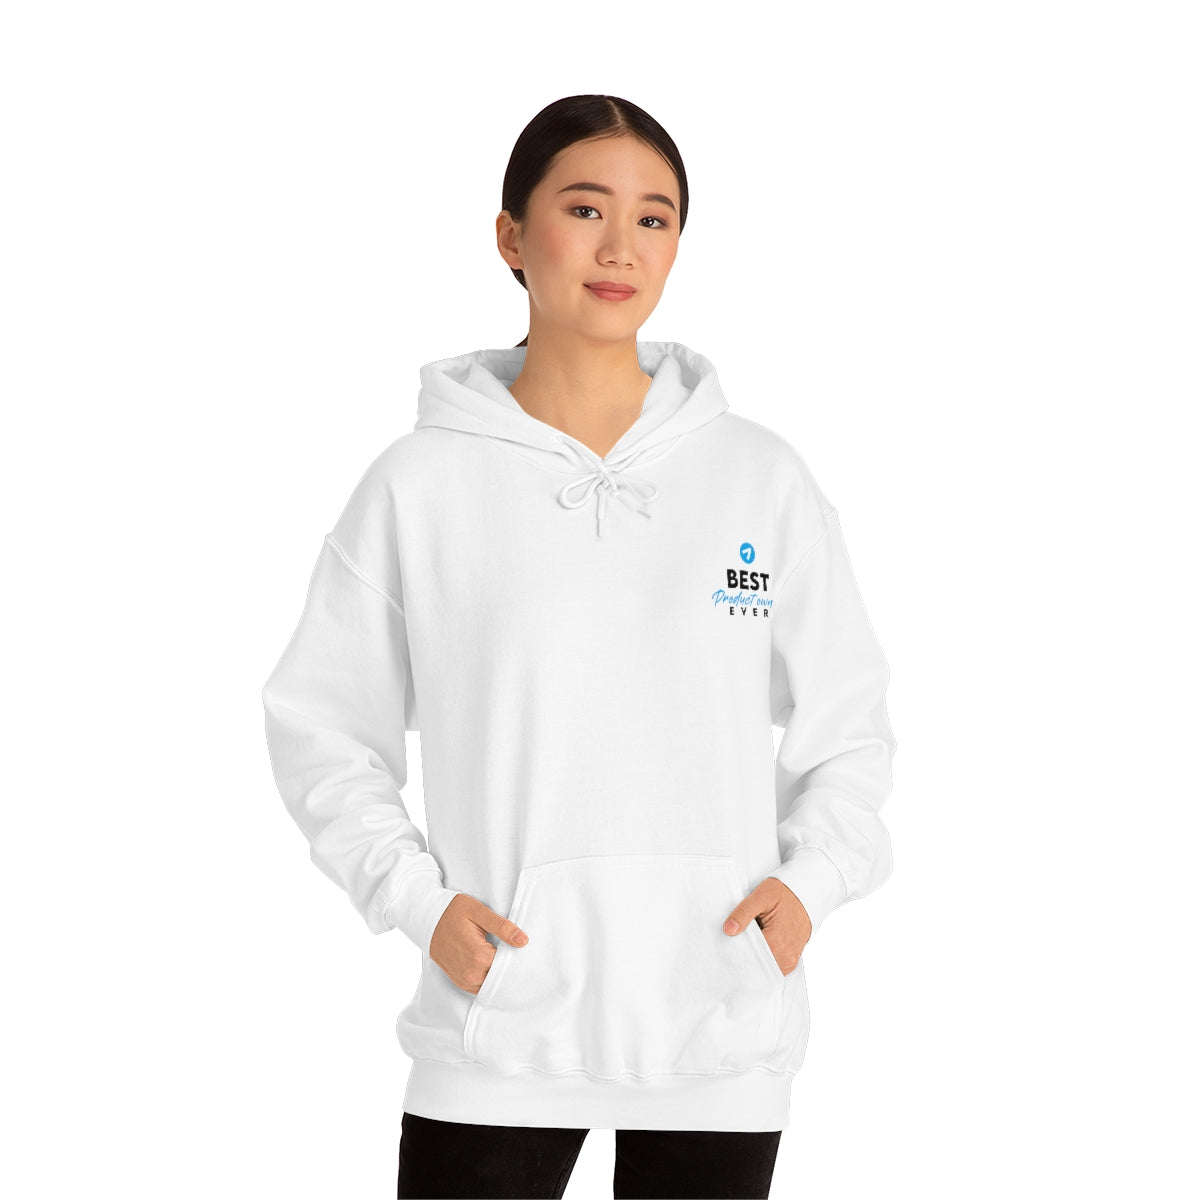 Best Product Owner ever - Light Blue - Unisex Heavy Blend™ Hooded Sweatshirt